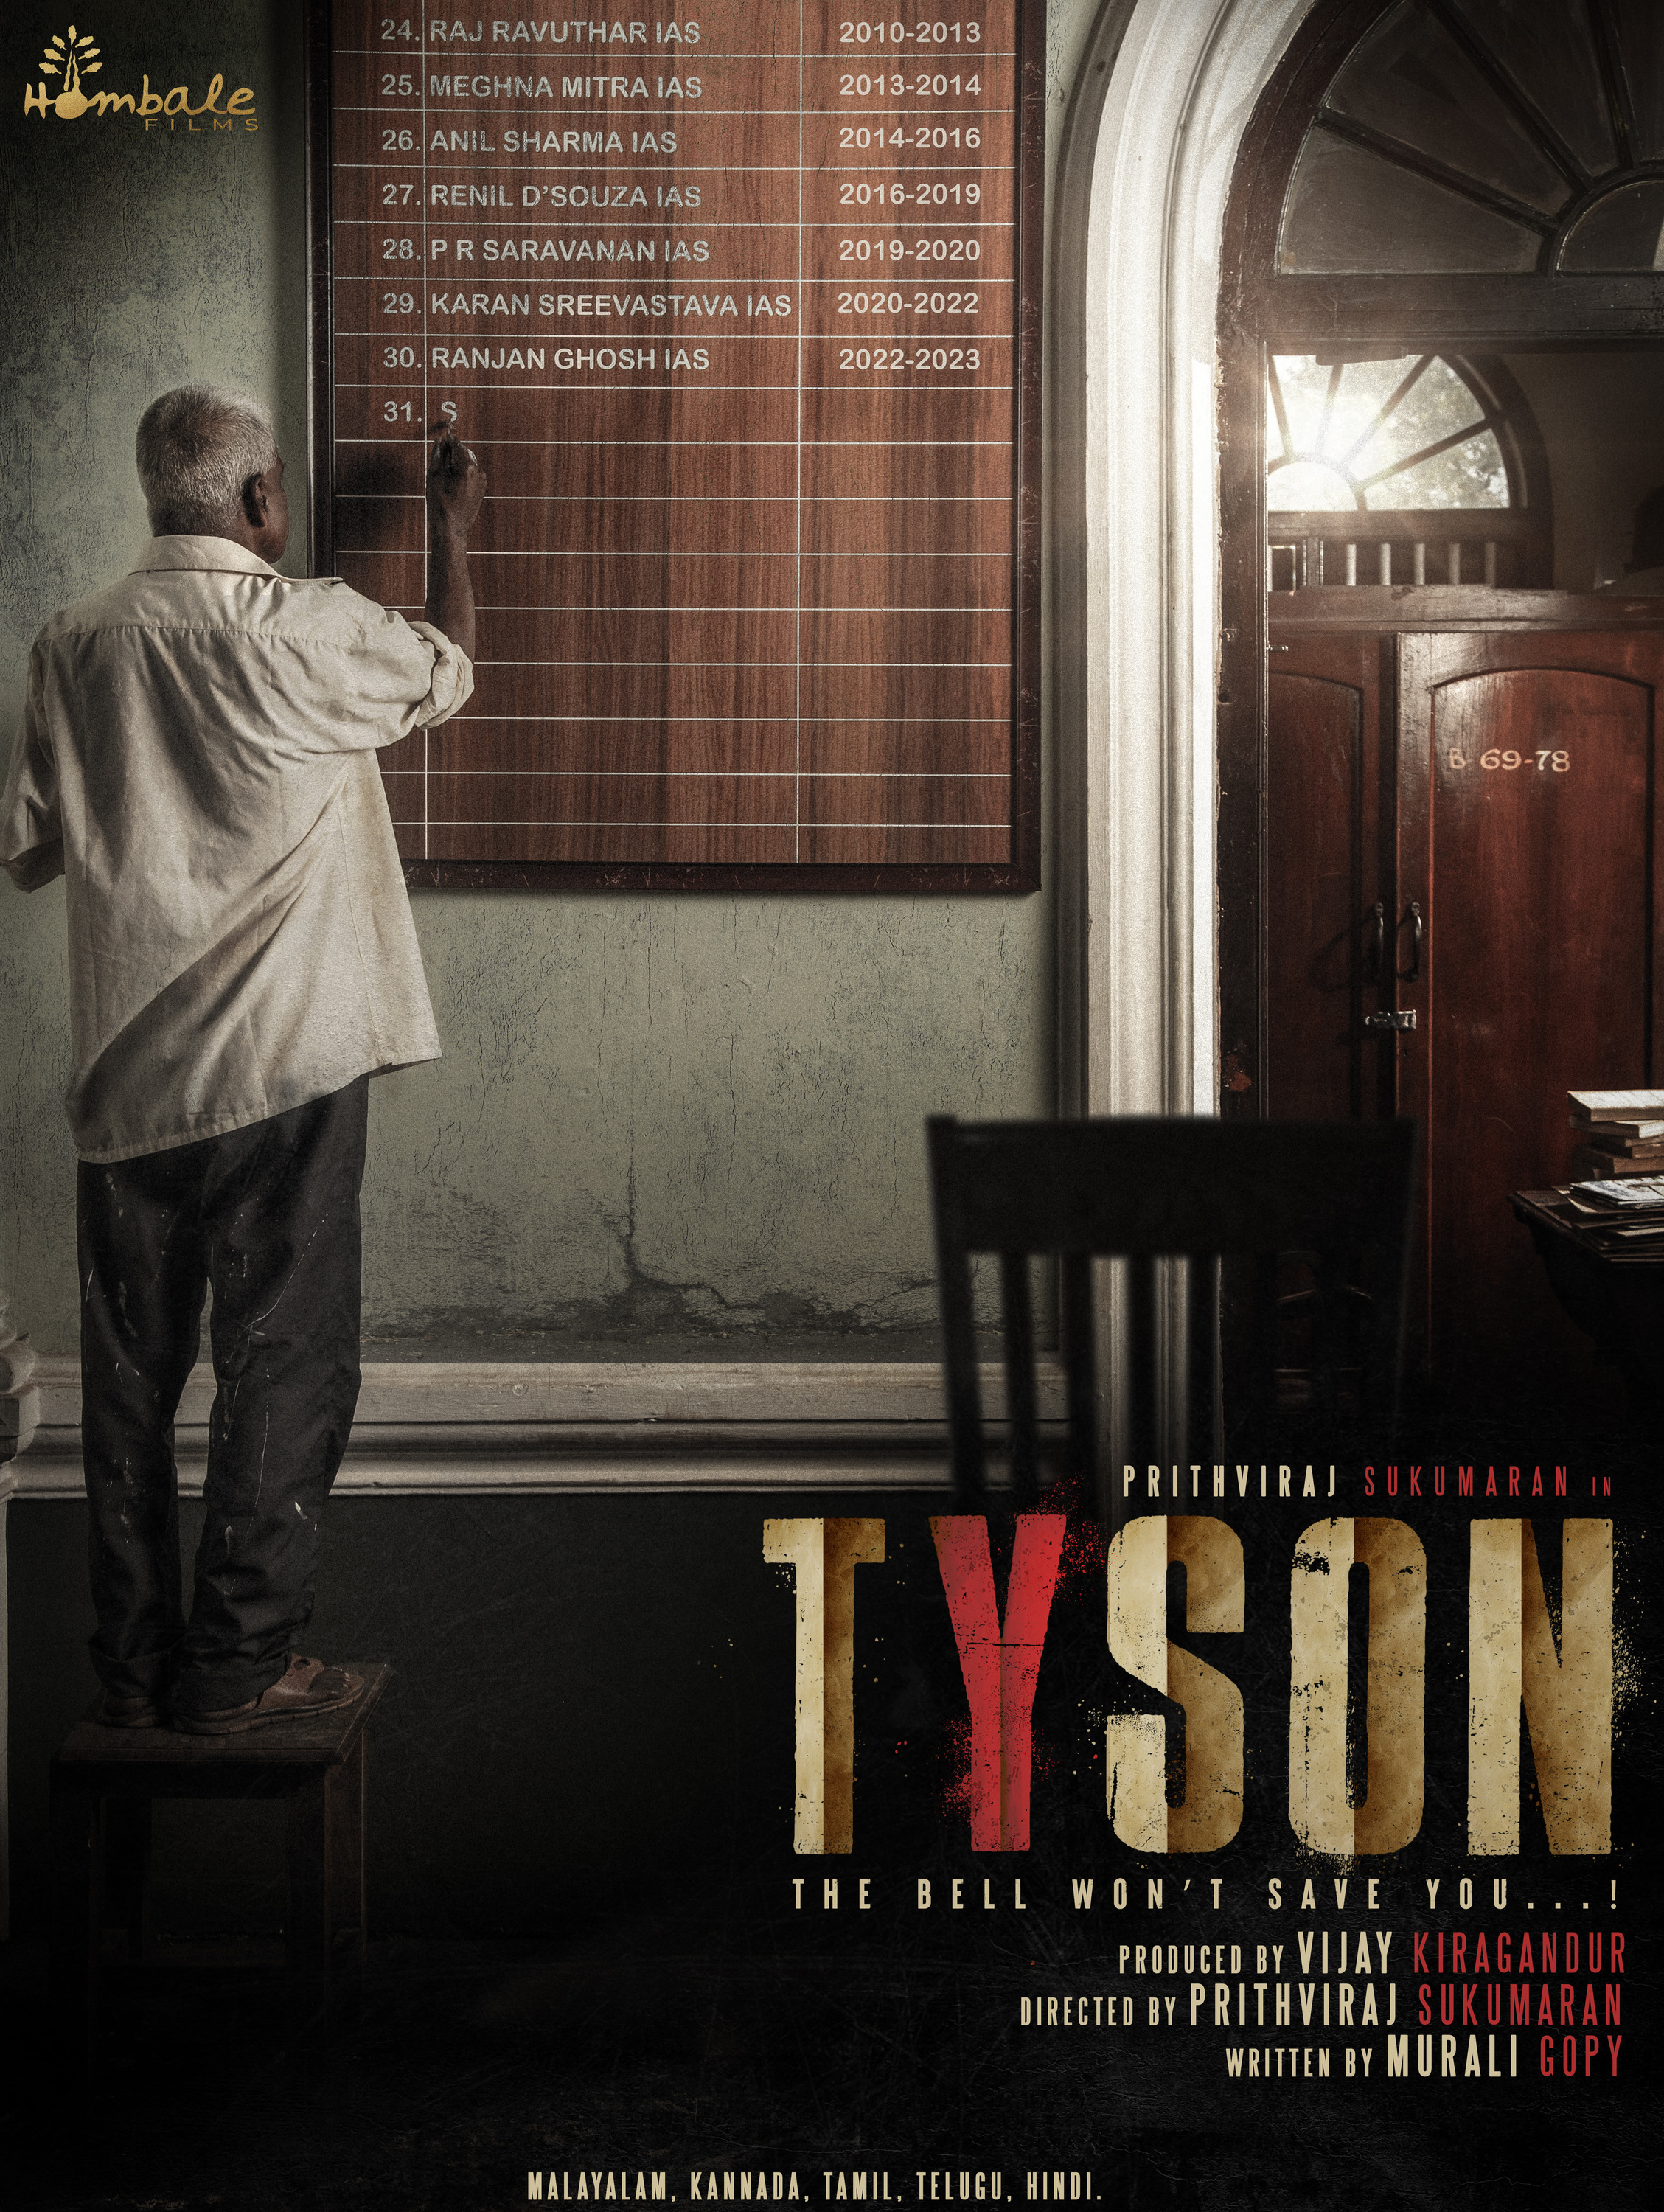 Mega Sized Movie Poster Image for Tyson 